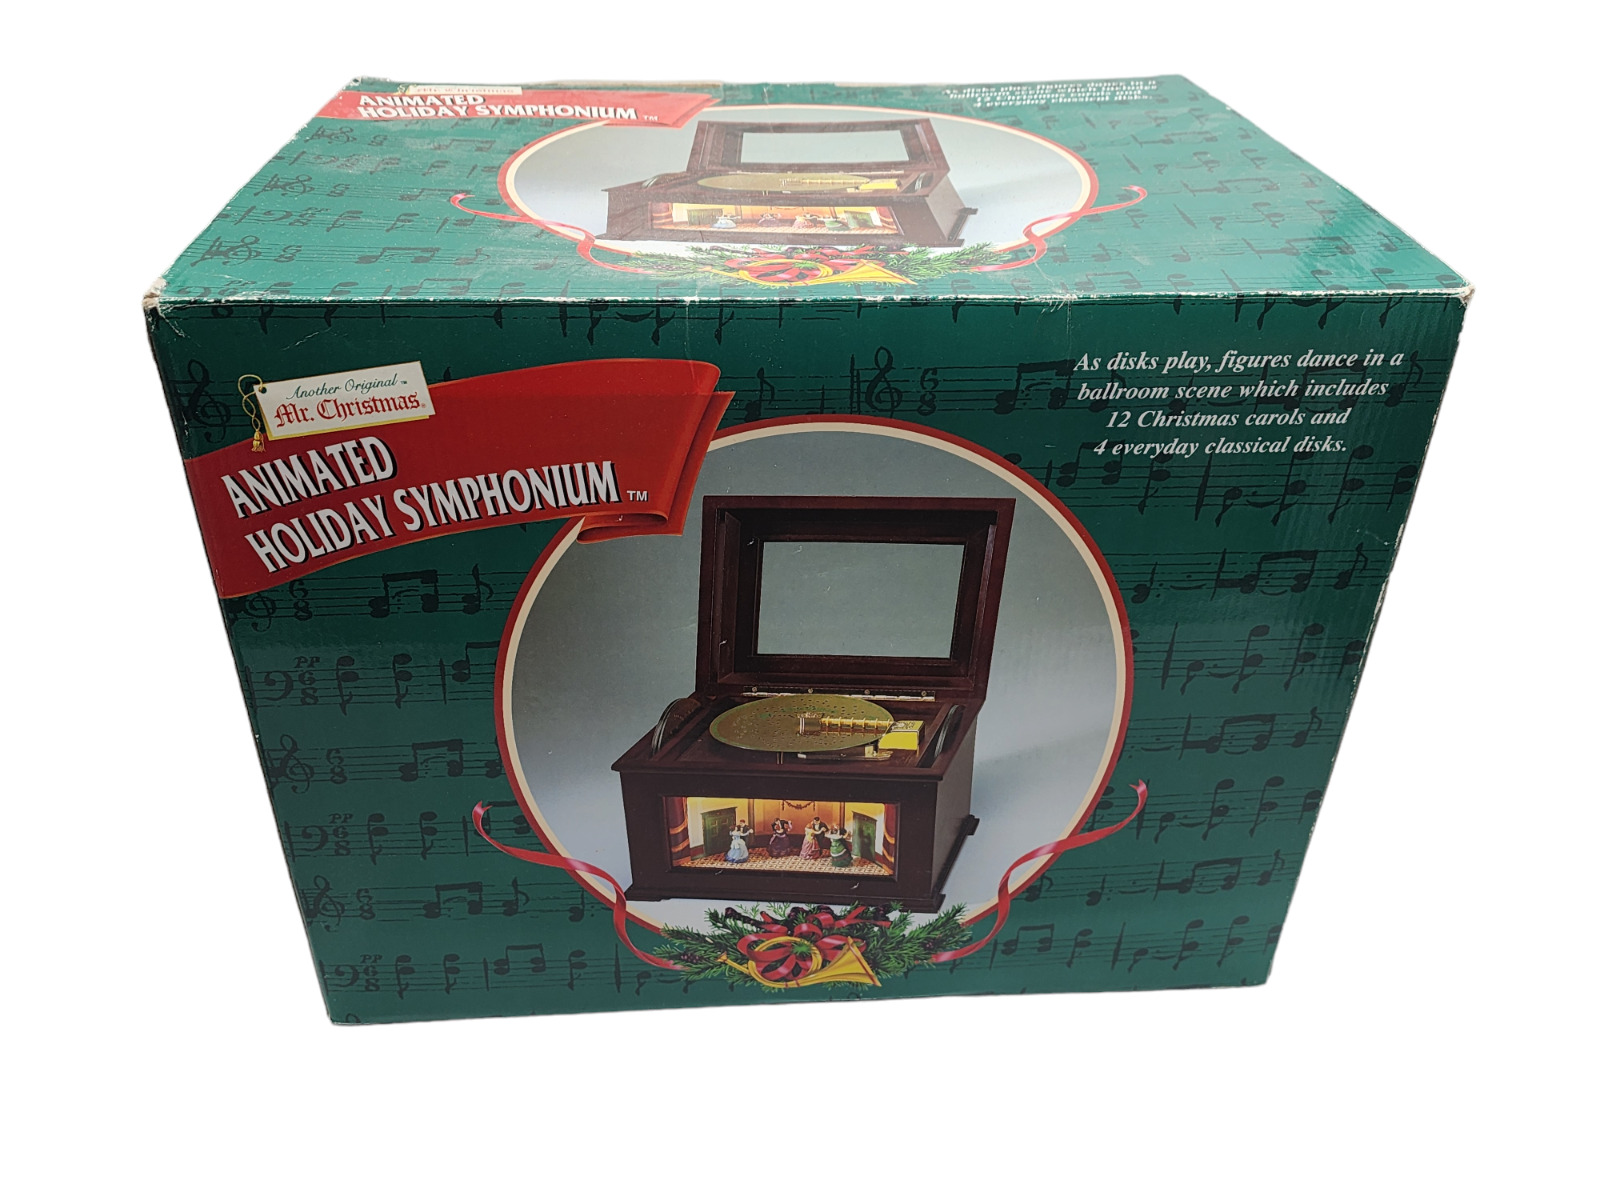 RARE Mr. Christmas Animated Holiday Symphonium Music Box Vintage 2000 New In Box